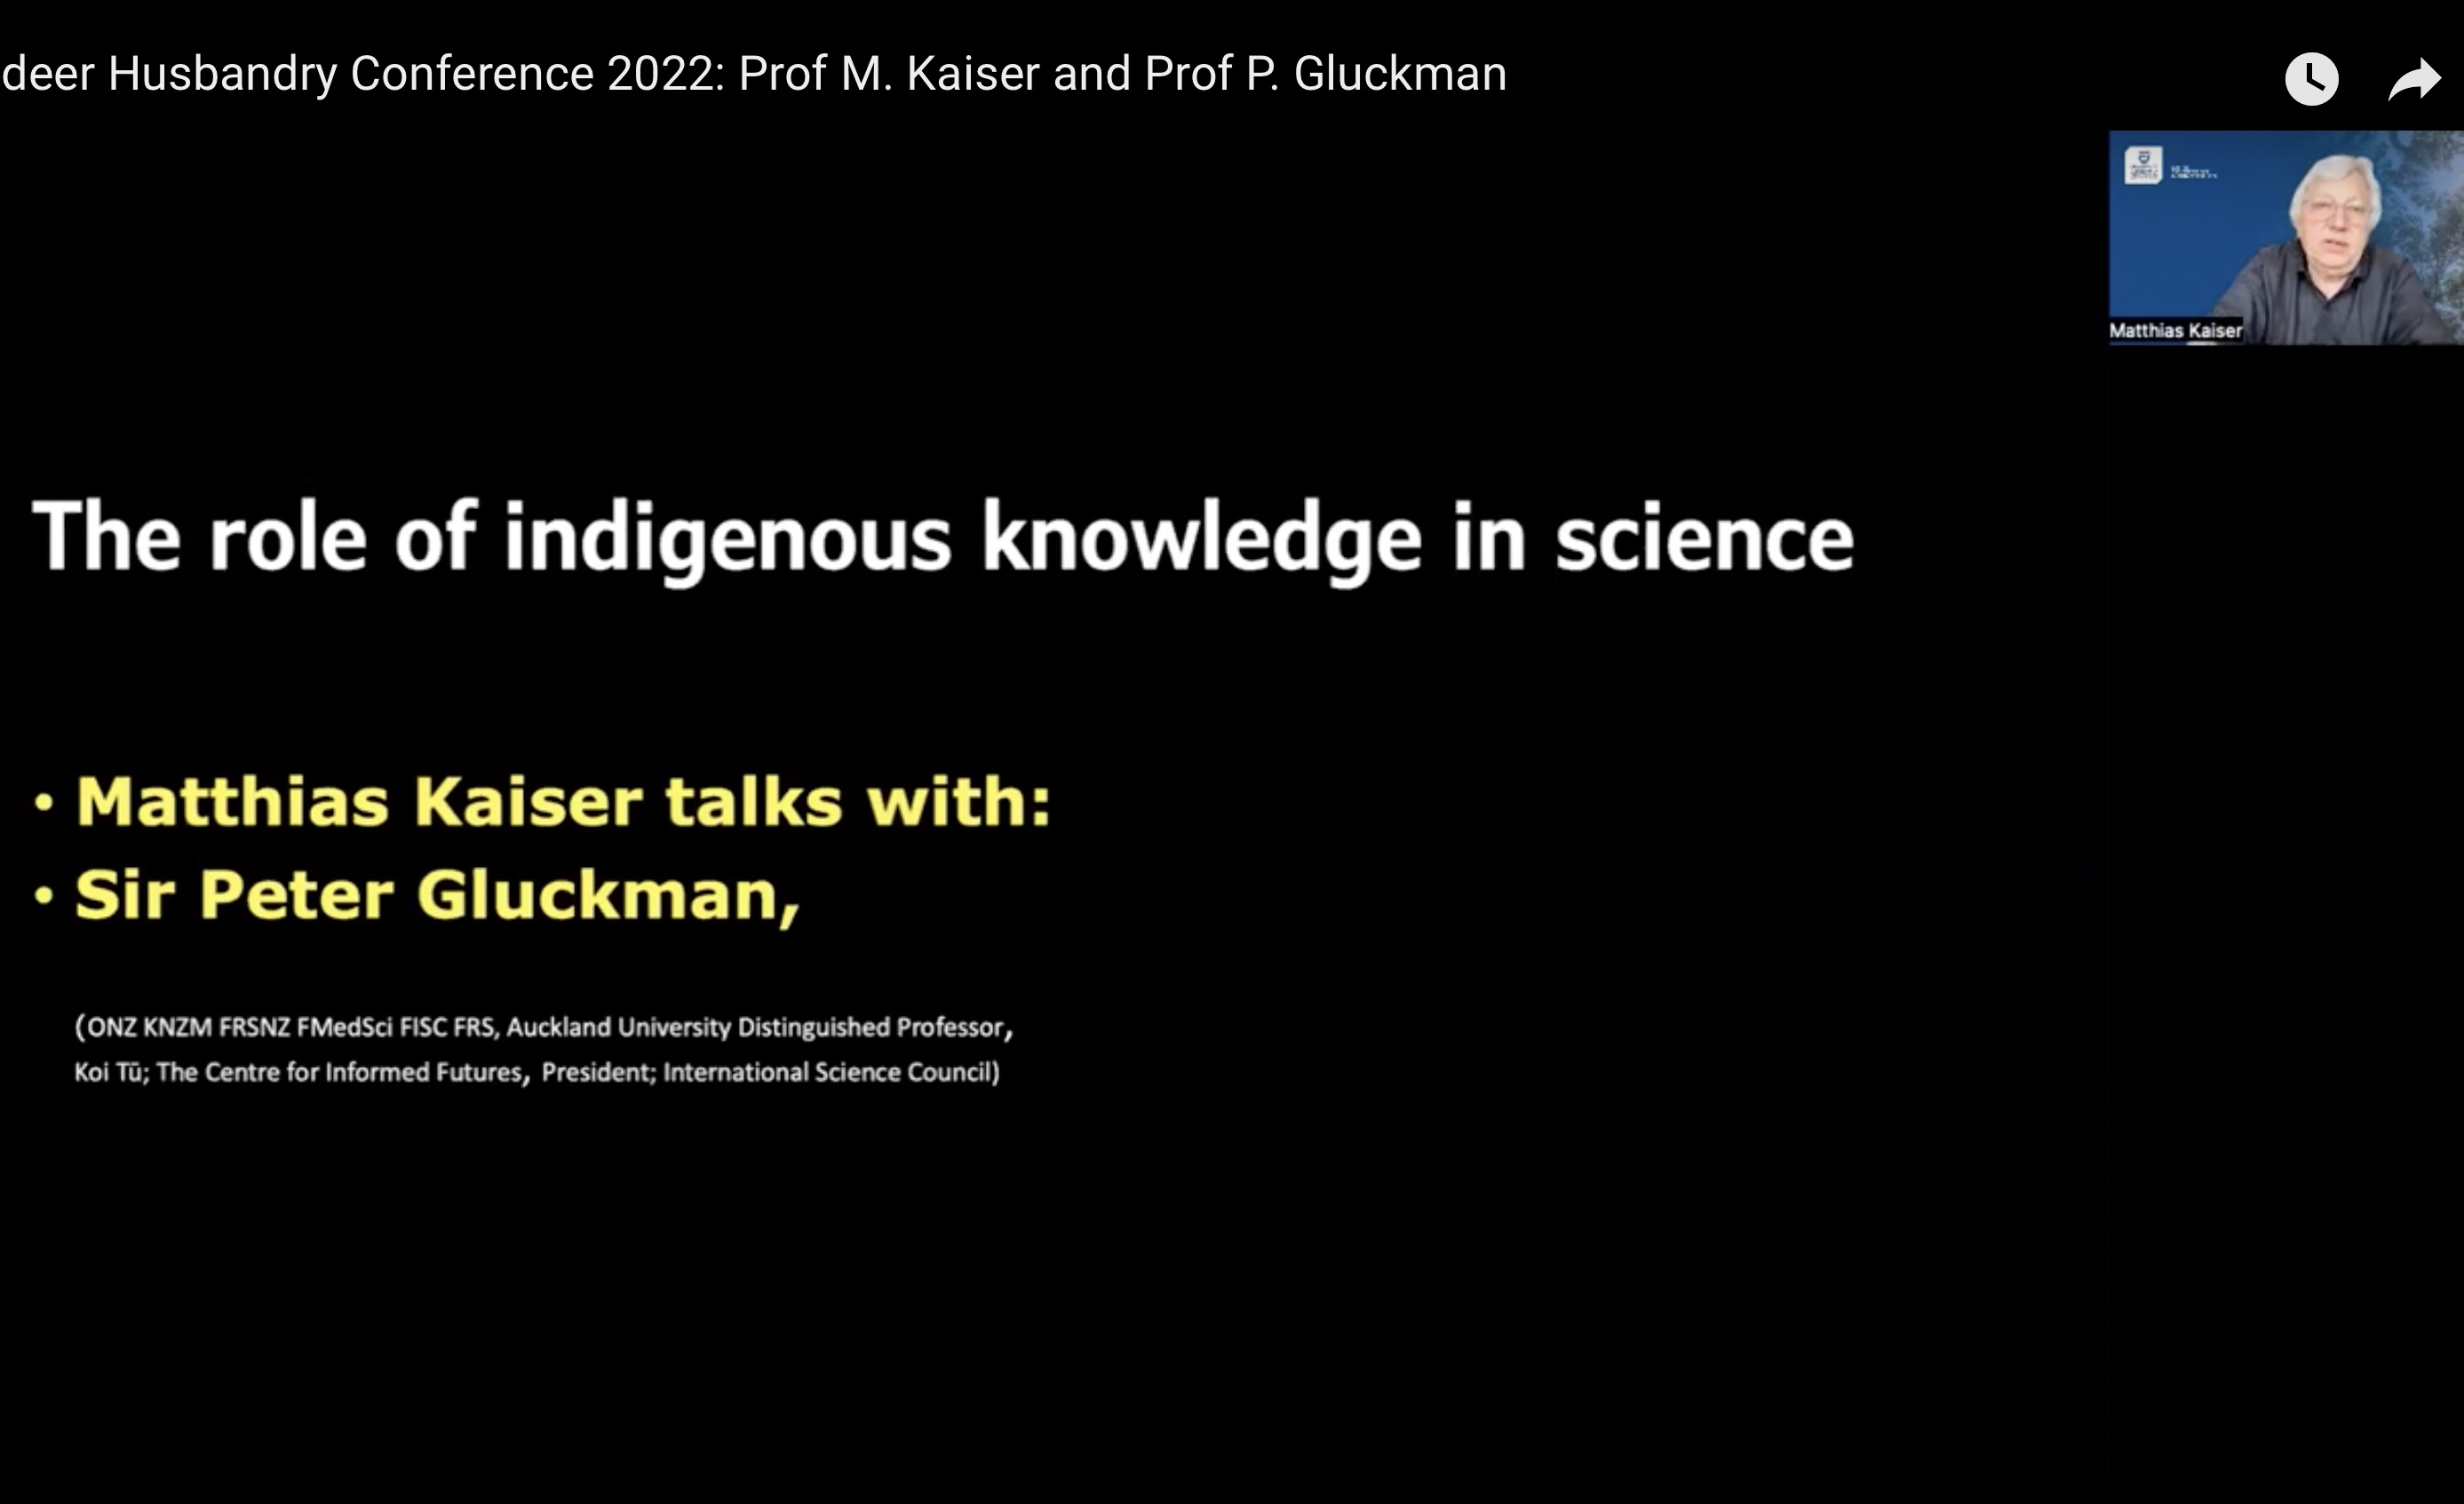 Prof M. Kaiser and Prof P. Gluckman